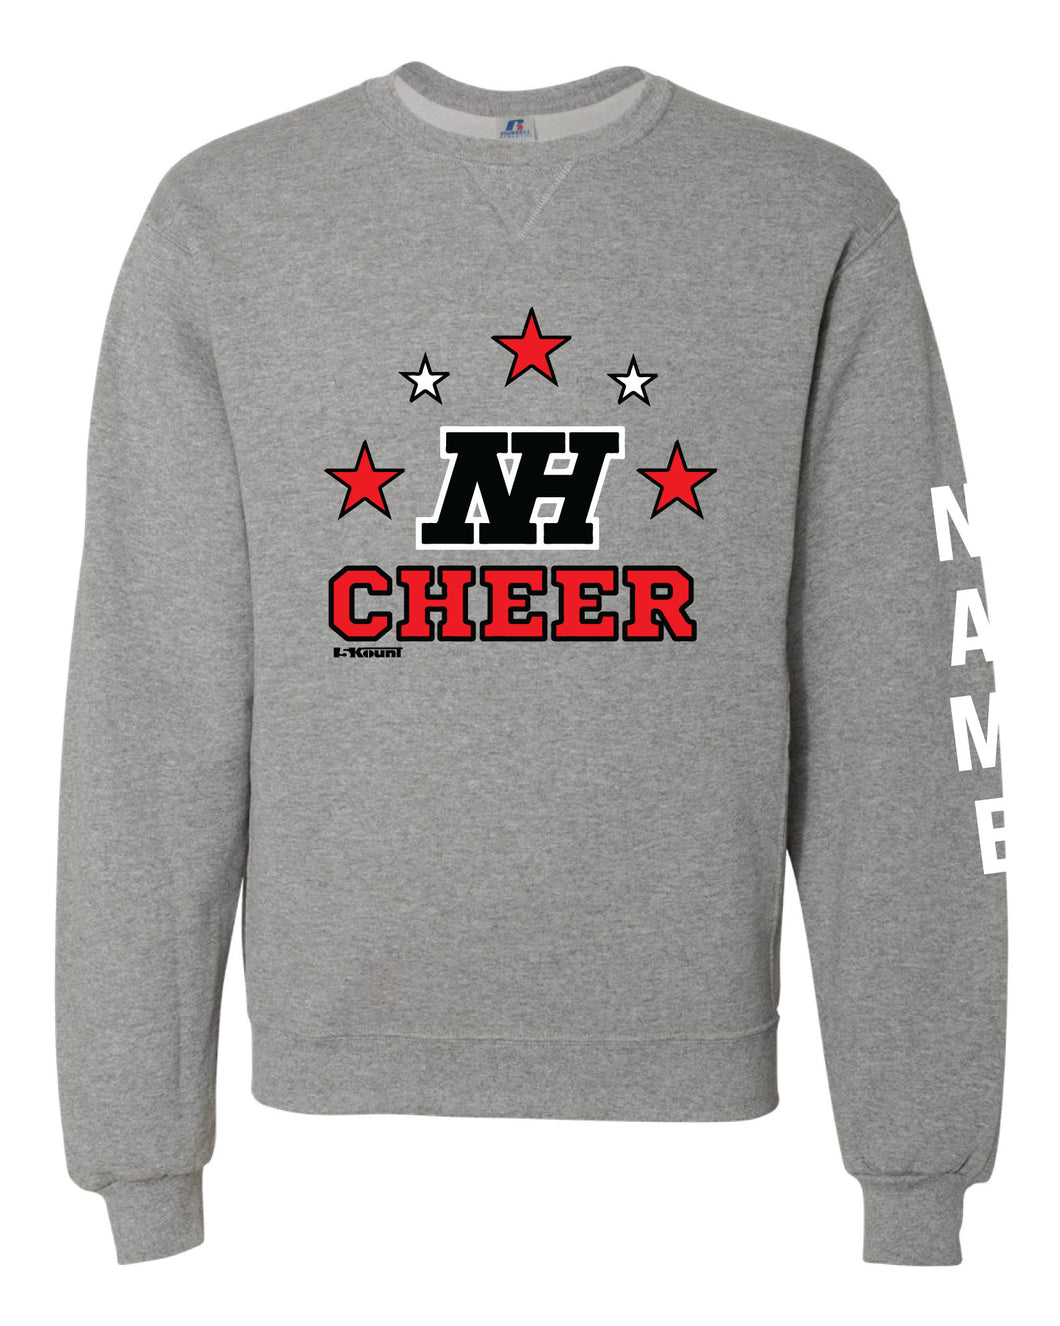 Highlands Cheer Russell Athletic Cotton Crewneck Sweatshirt Design 1 - Gray - 5KounT2018